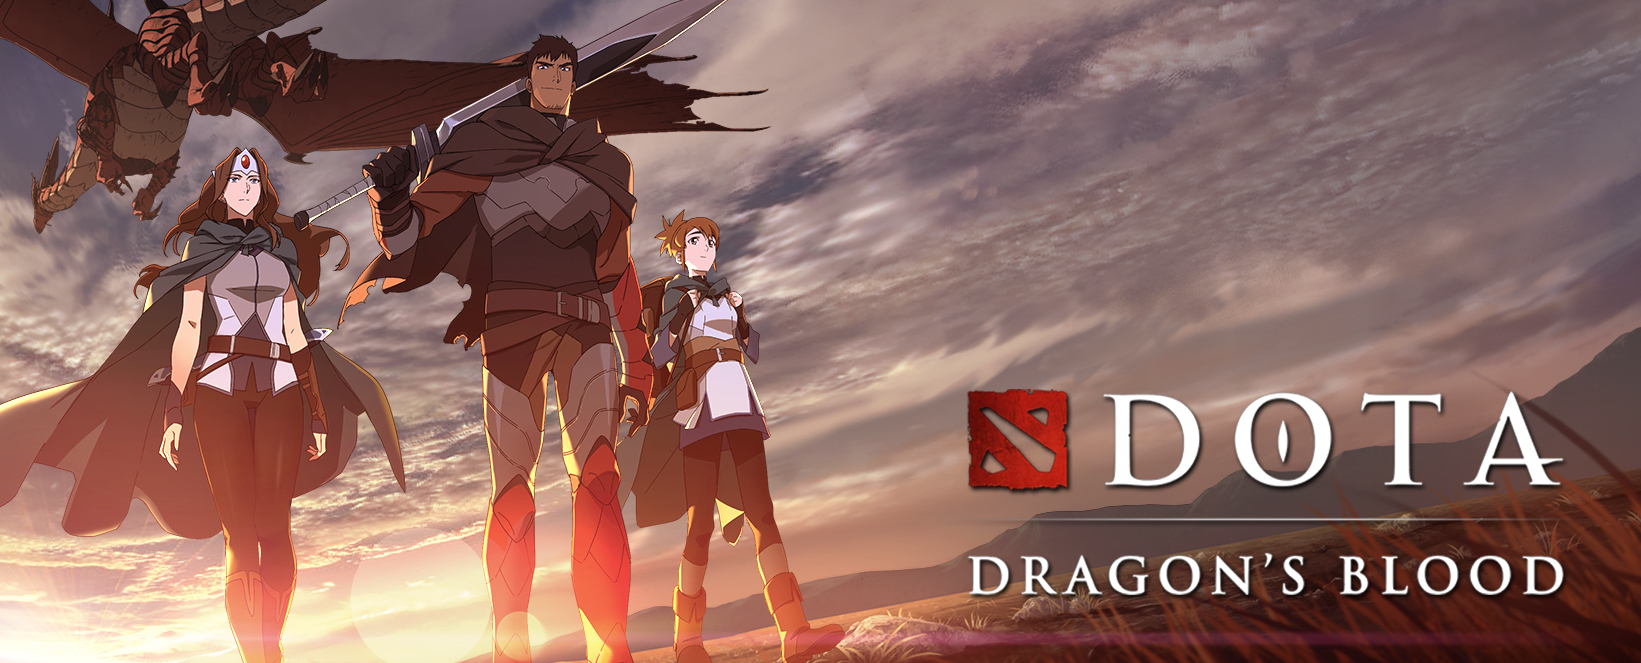 Dota: Dragon's Blood - Dota 2 Wiki